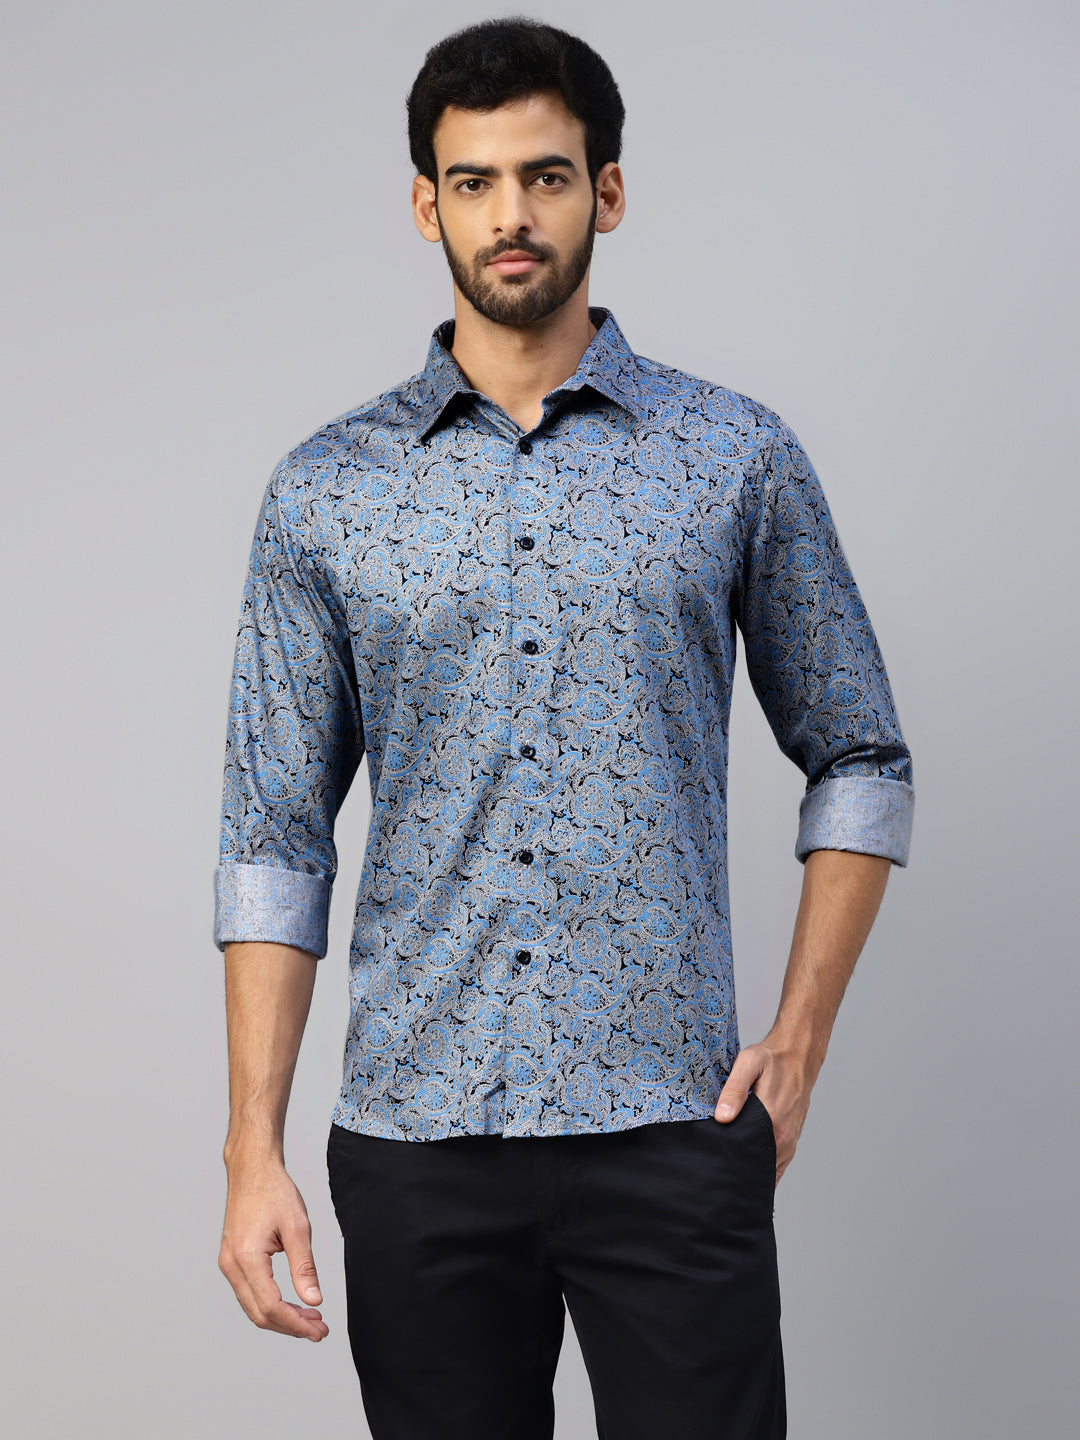 Don Vino Men's Blue Paisley Print Slim Fit Shirt